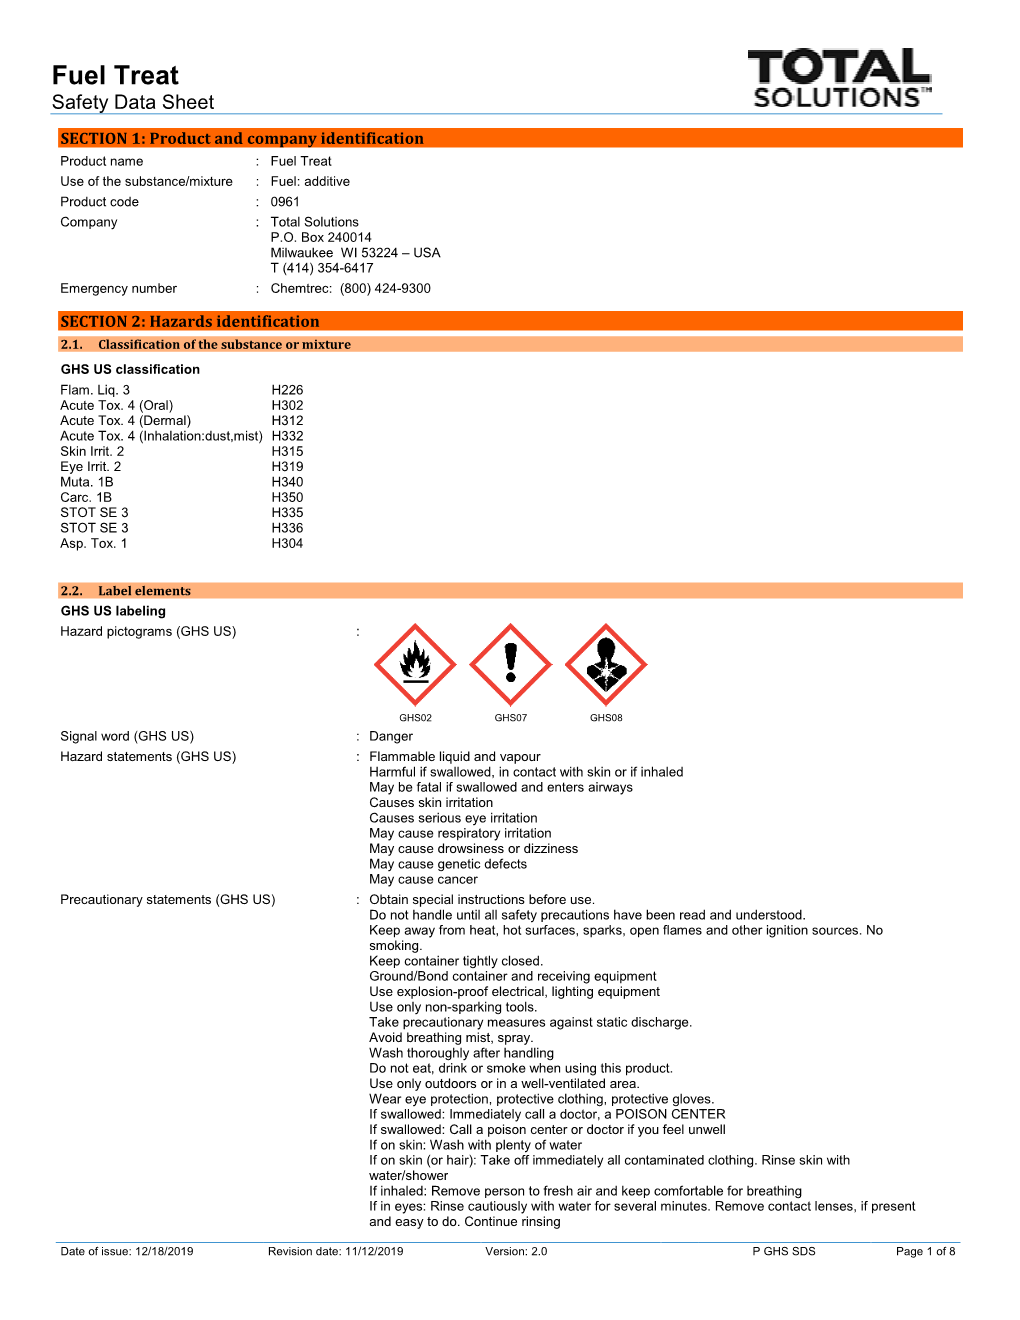 Fuel Treat Safety Data Sheet